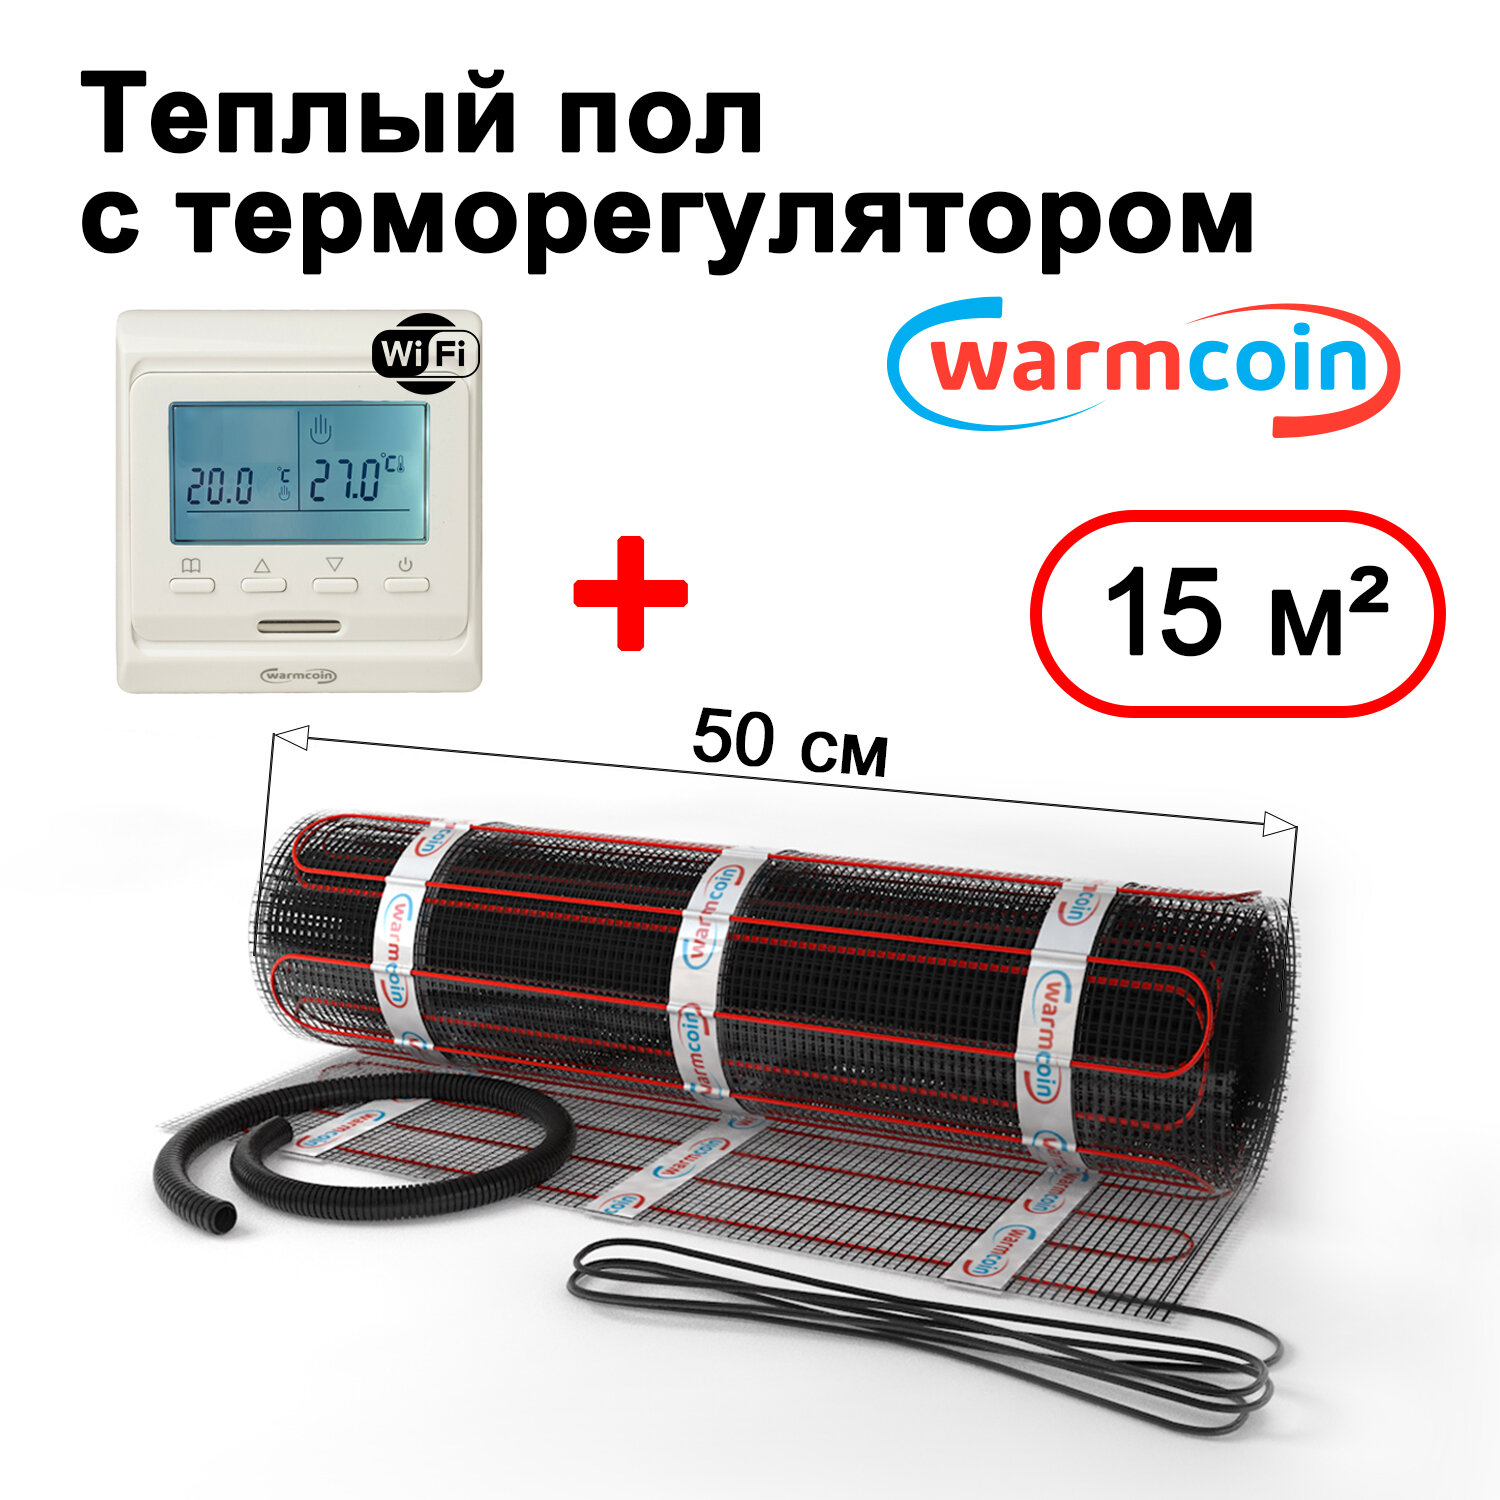 Теплый пол электрический Warmcoin BLACK с терморегулятором W51 Wi-Fi белым 15 м. кв.